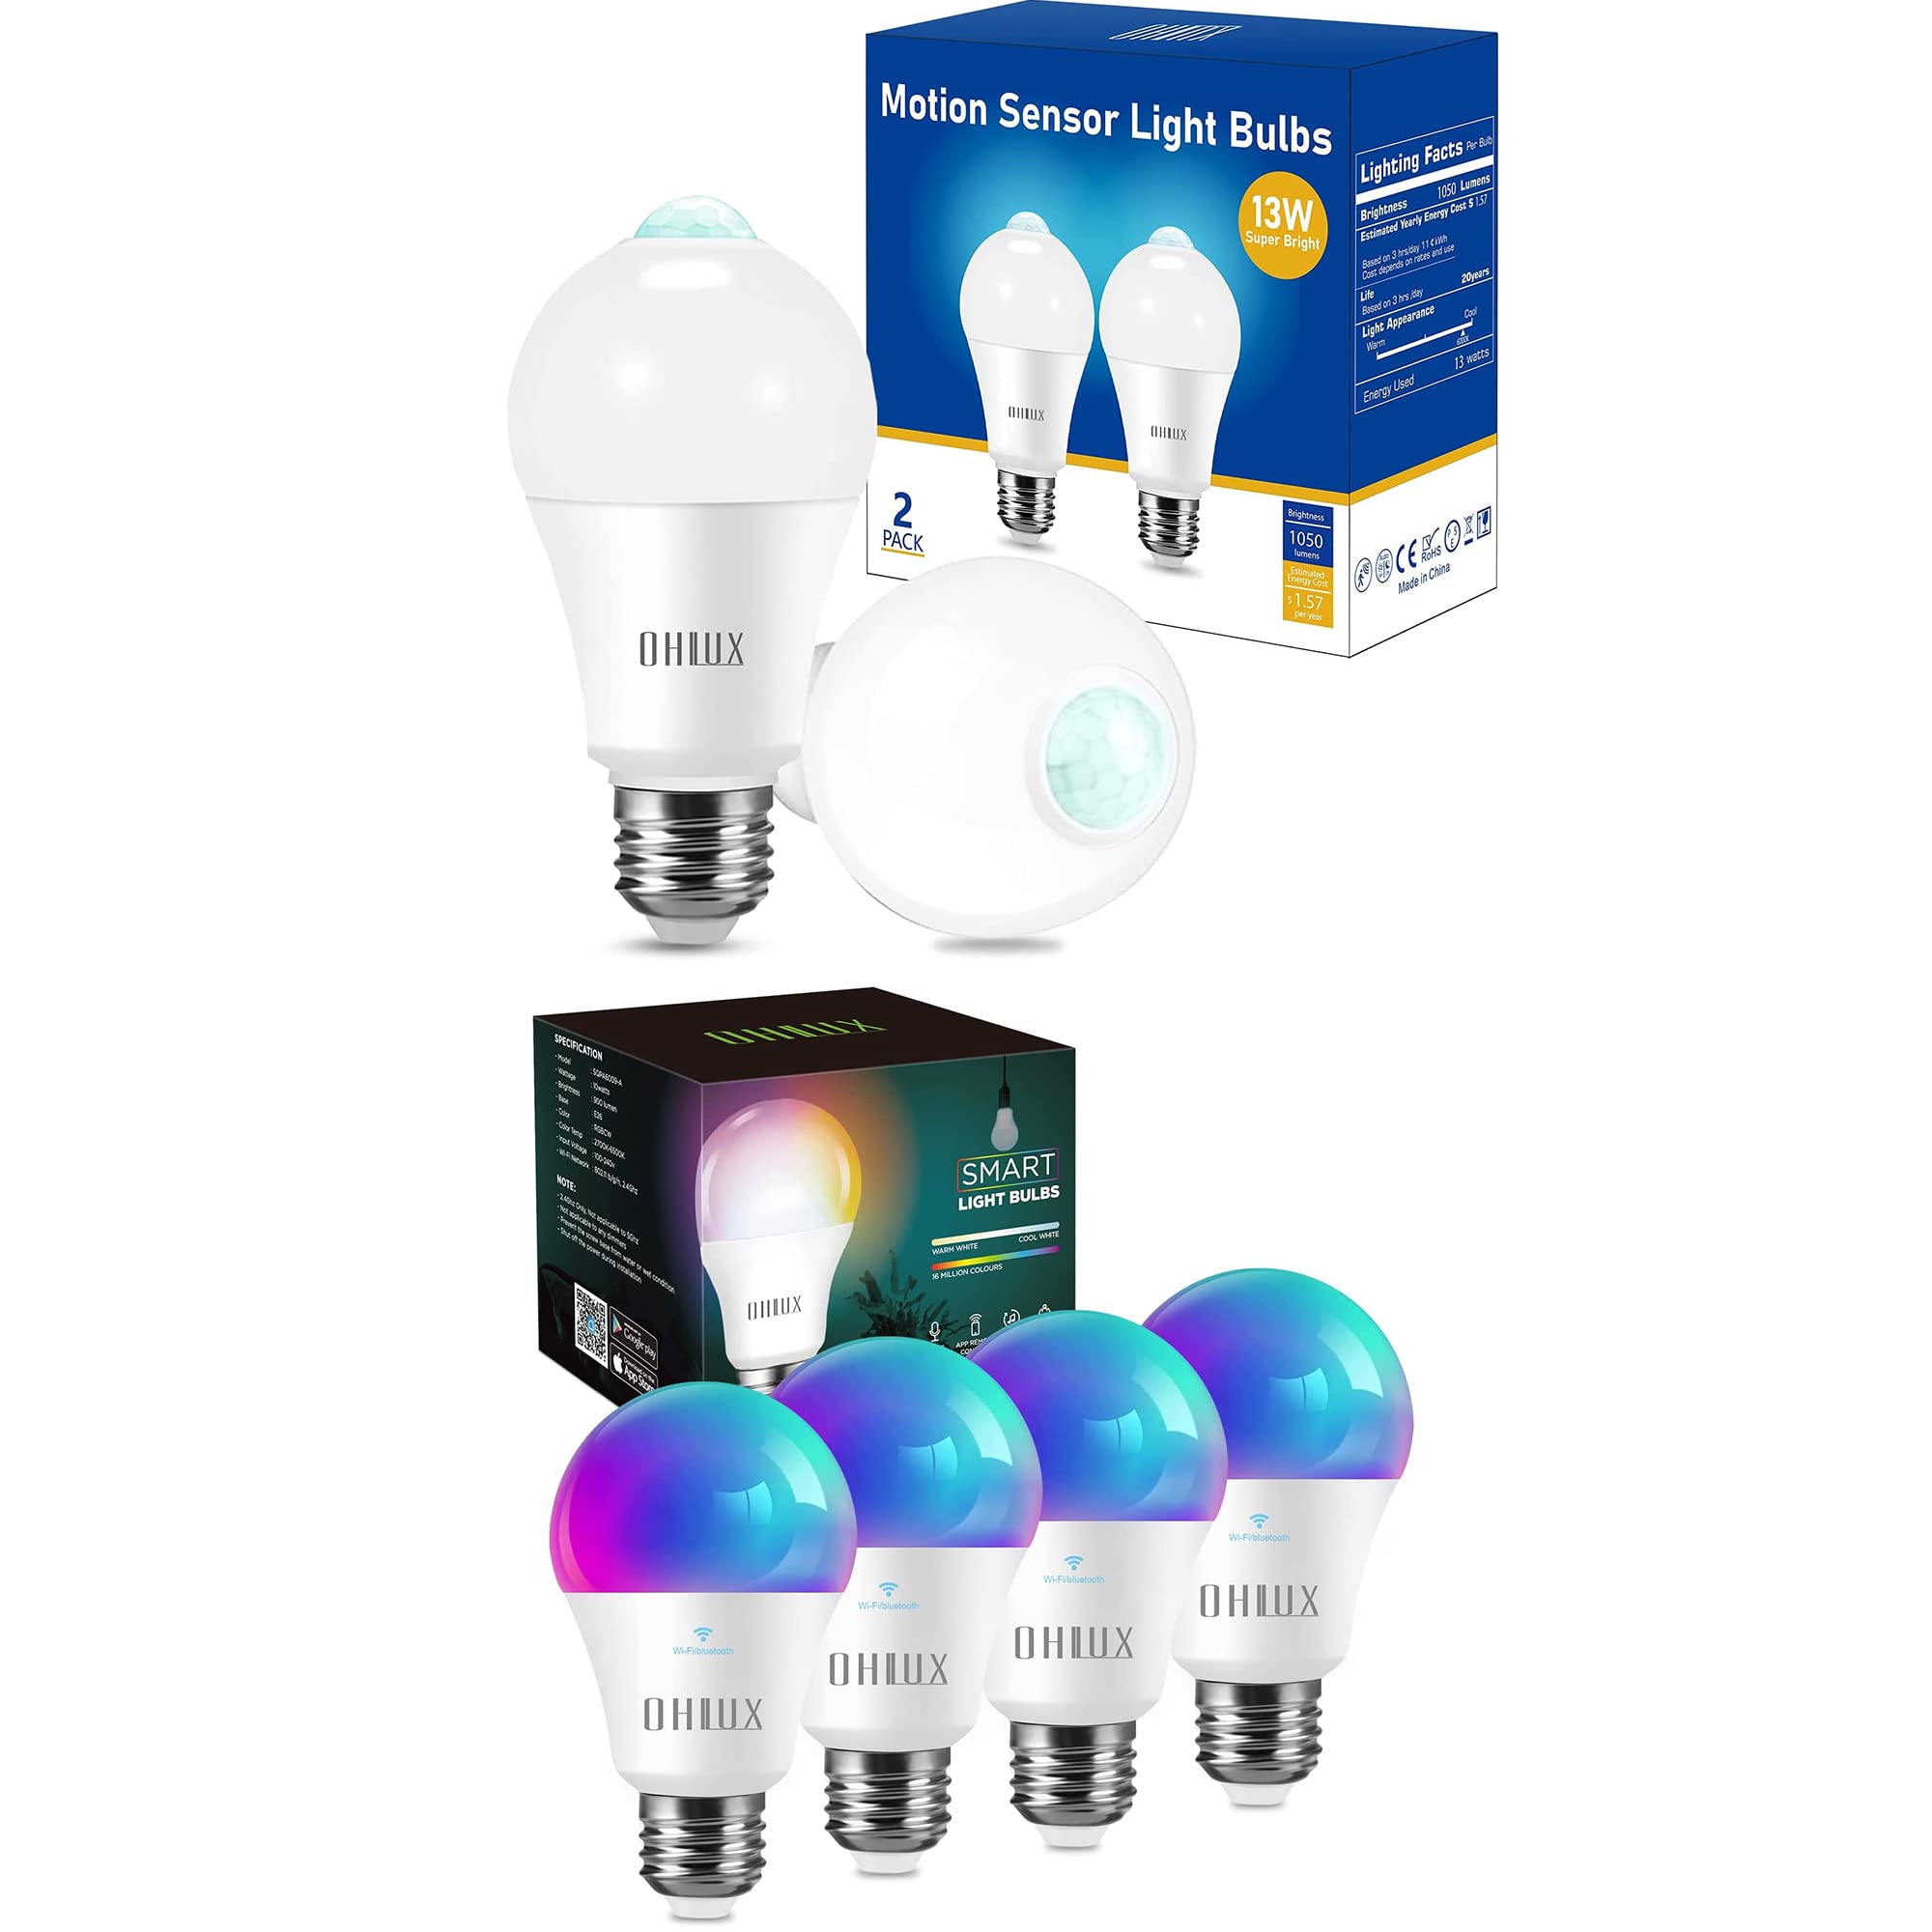 OHLUX Motion Sensor Bulbs and Smart Light Bulbs Bundle Package